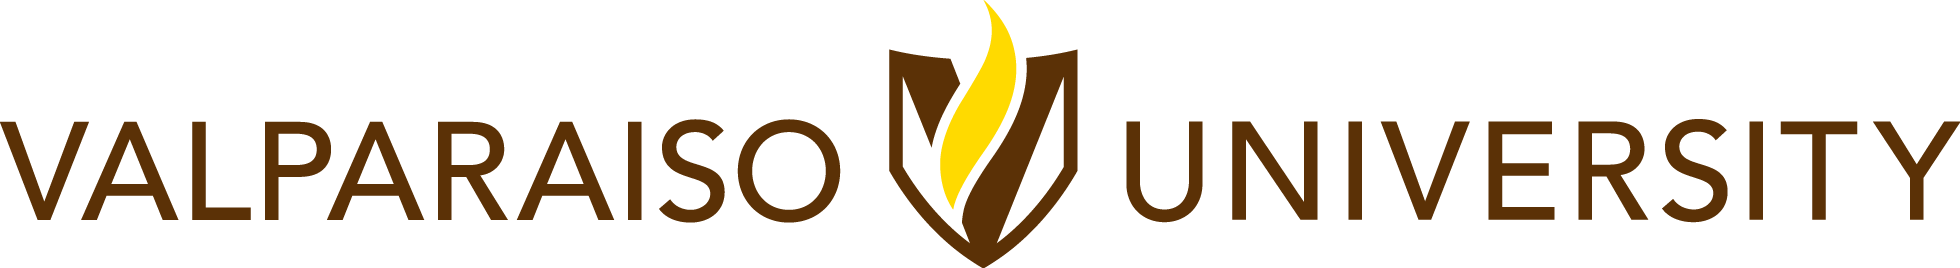 Valparaiso Logo - Our Logos | Valparaiso University Brand